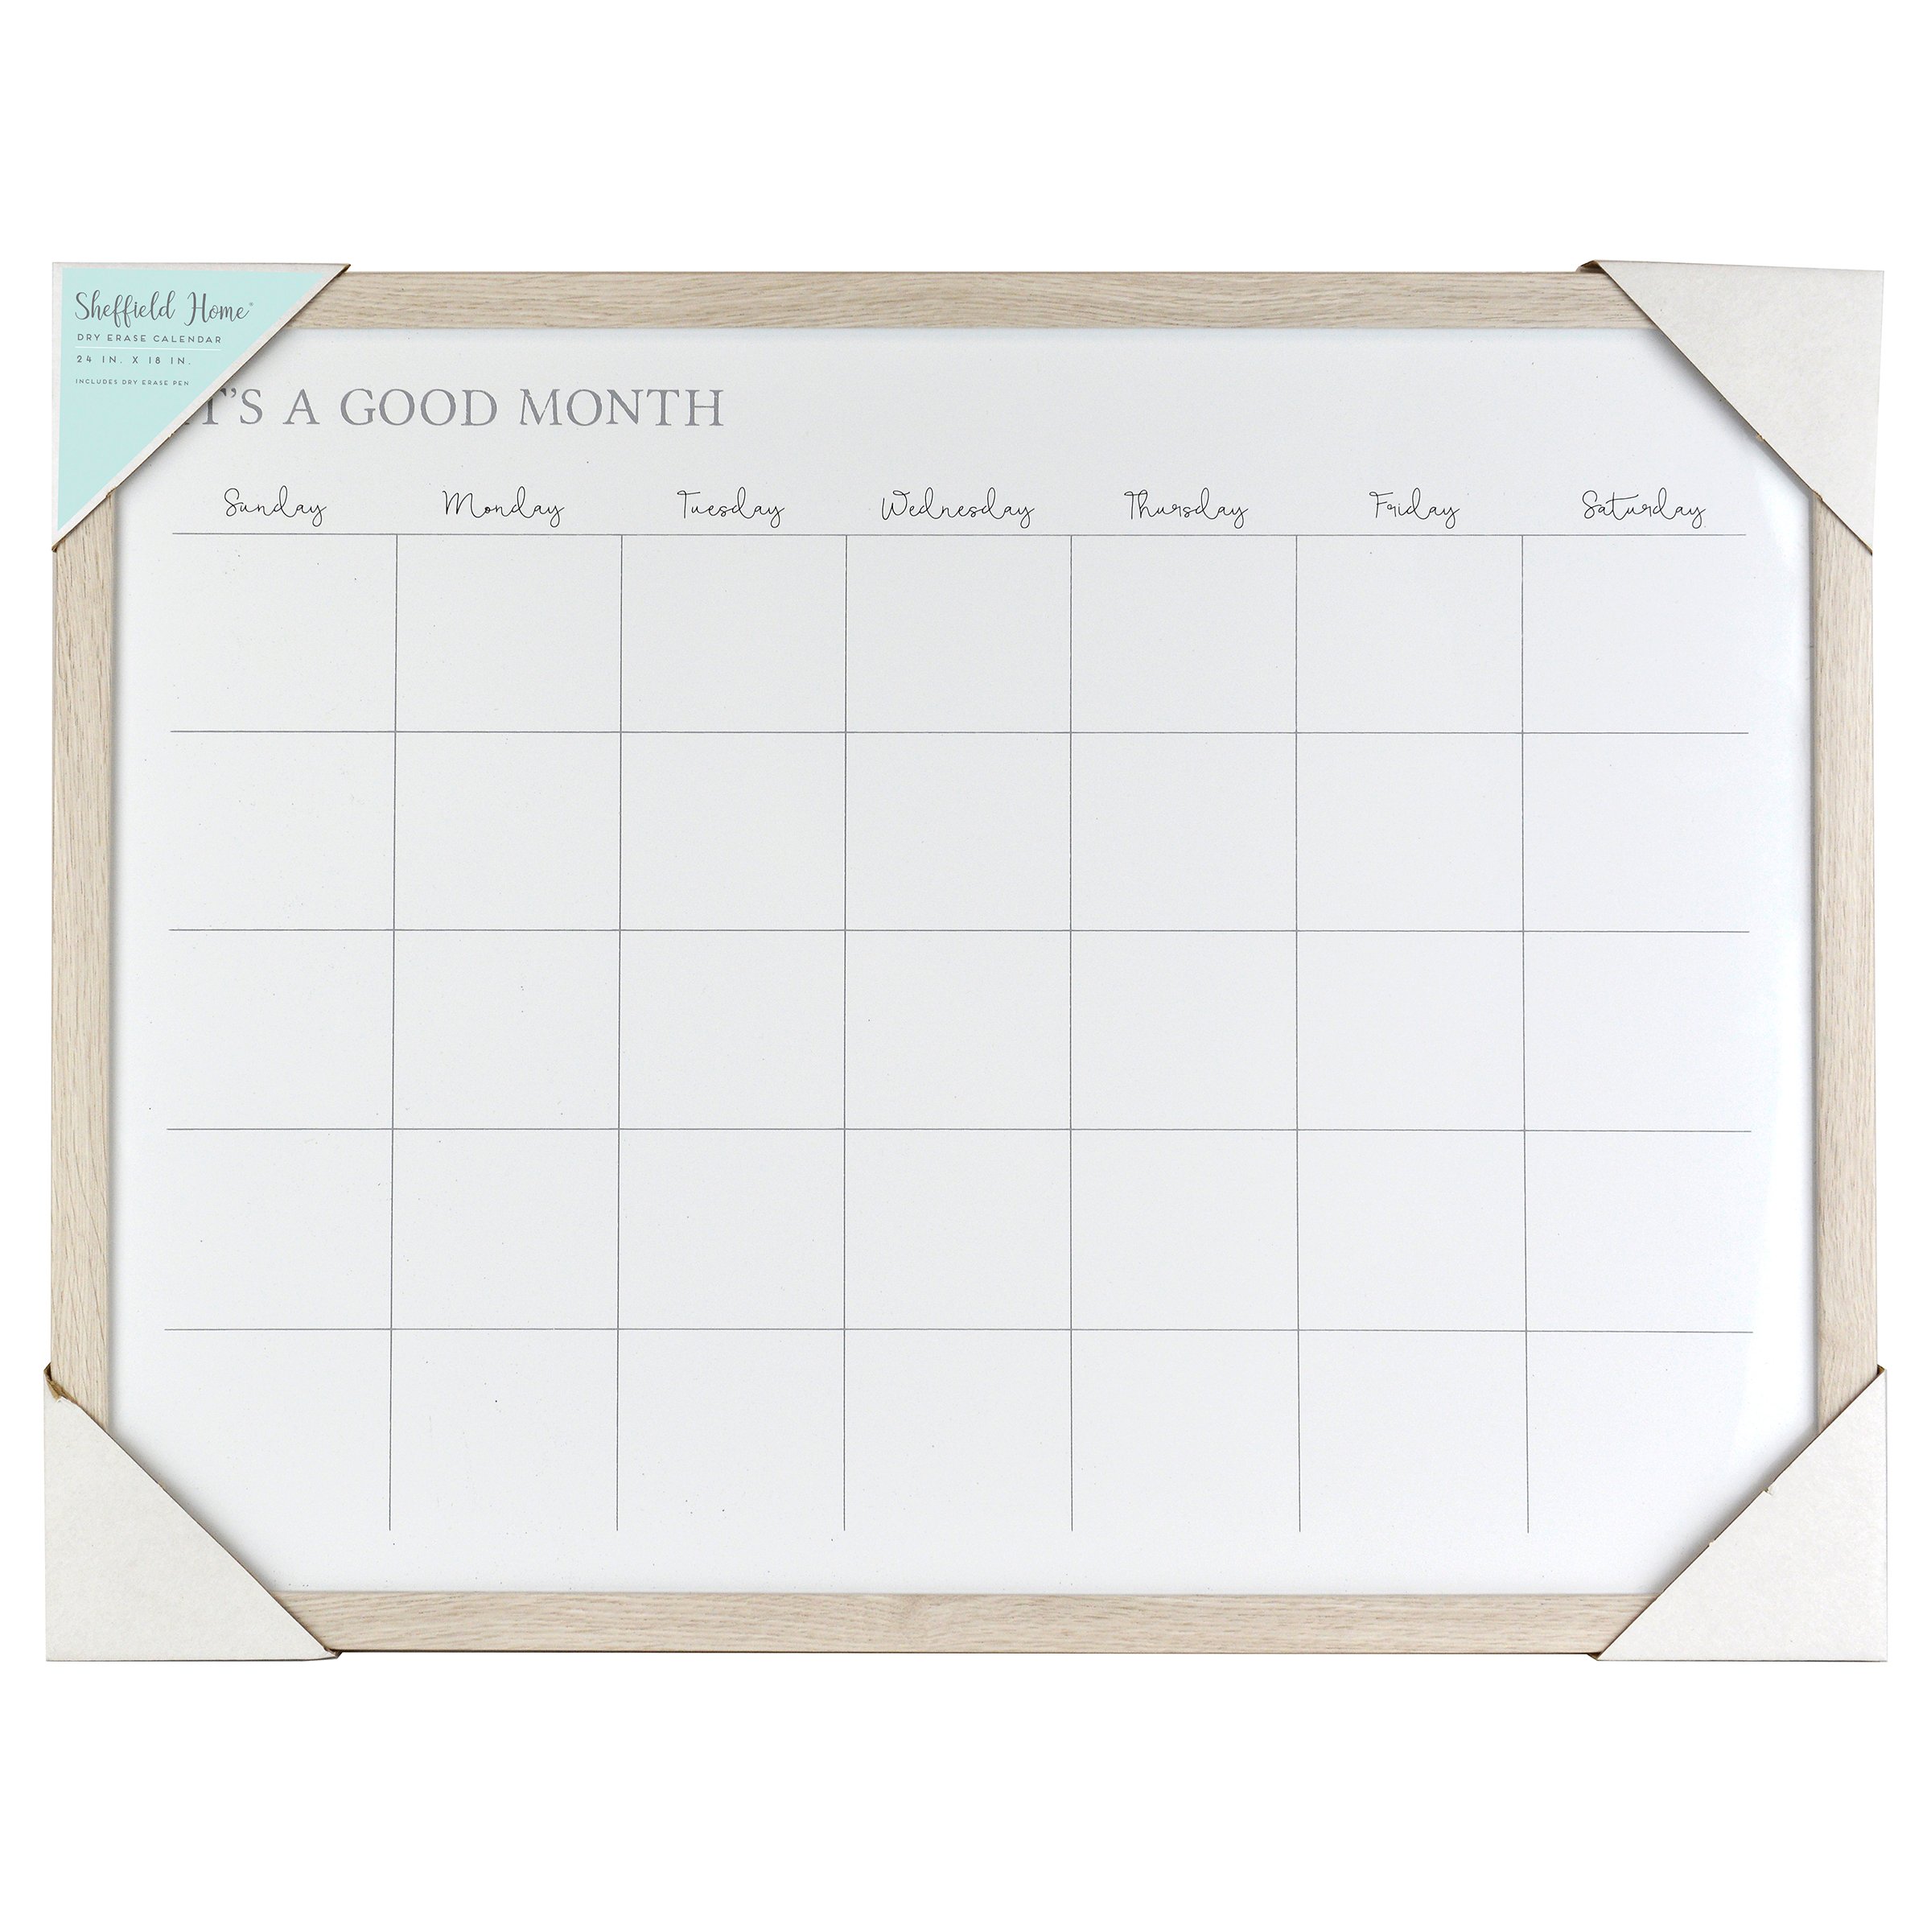 Sheffield Home Monthly Planner Wood Frame Dry Erase Calendar Shop